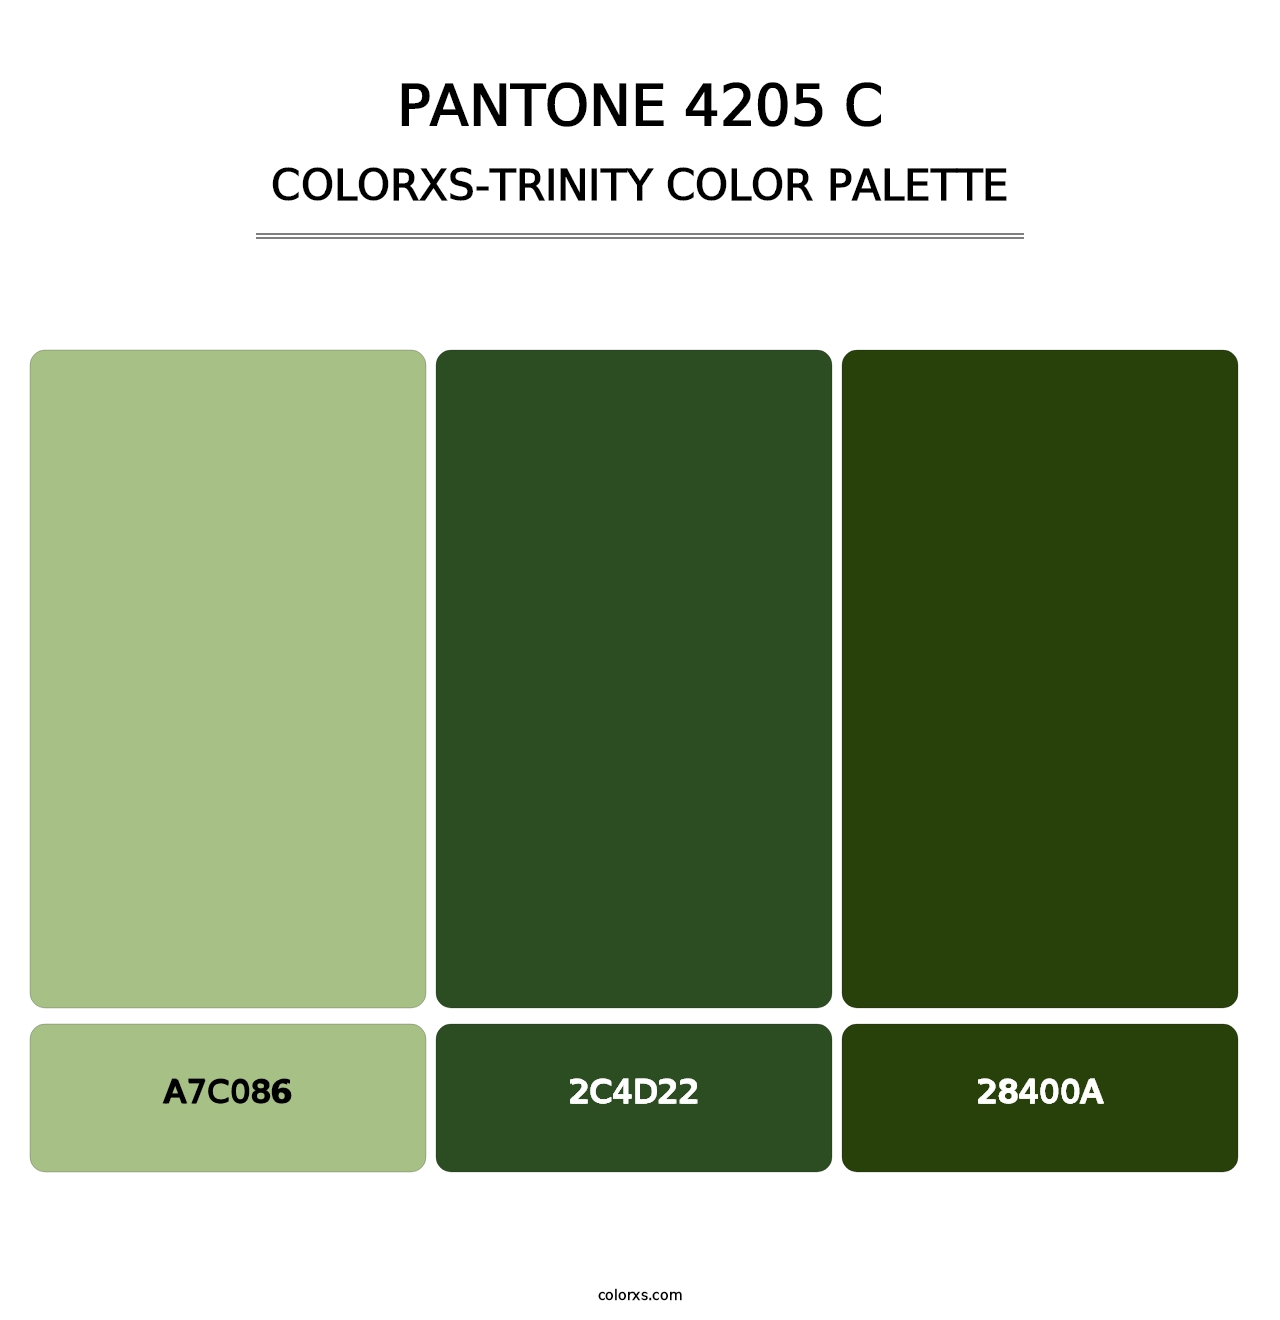 PANTONE 4205 C - Colorxs Trinity Palette